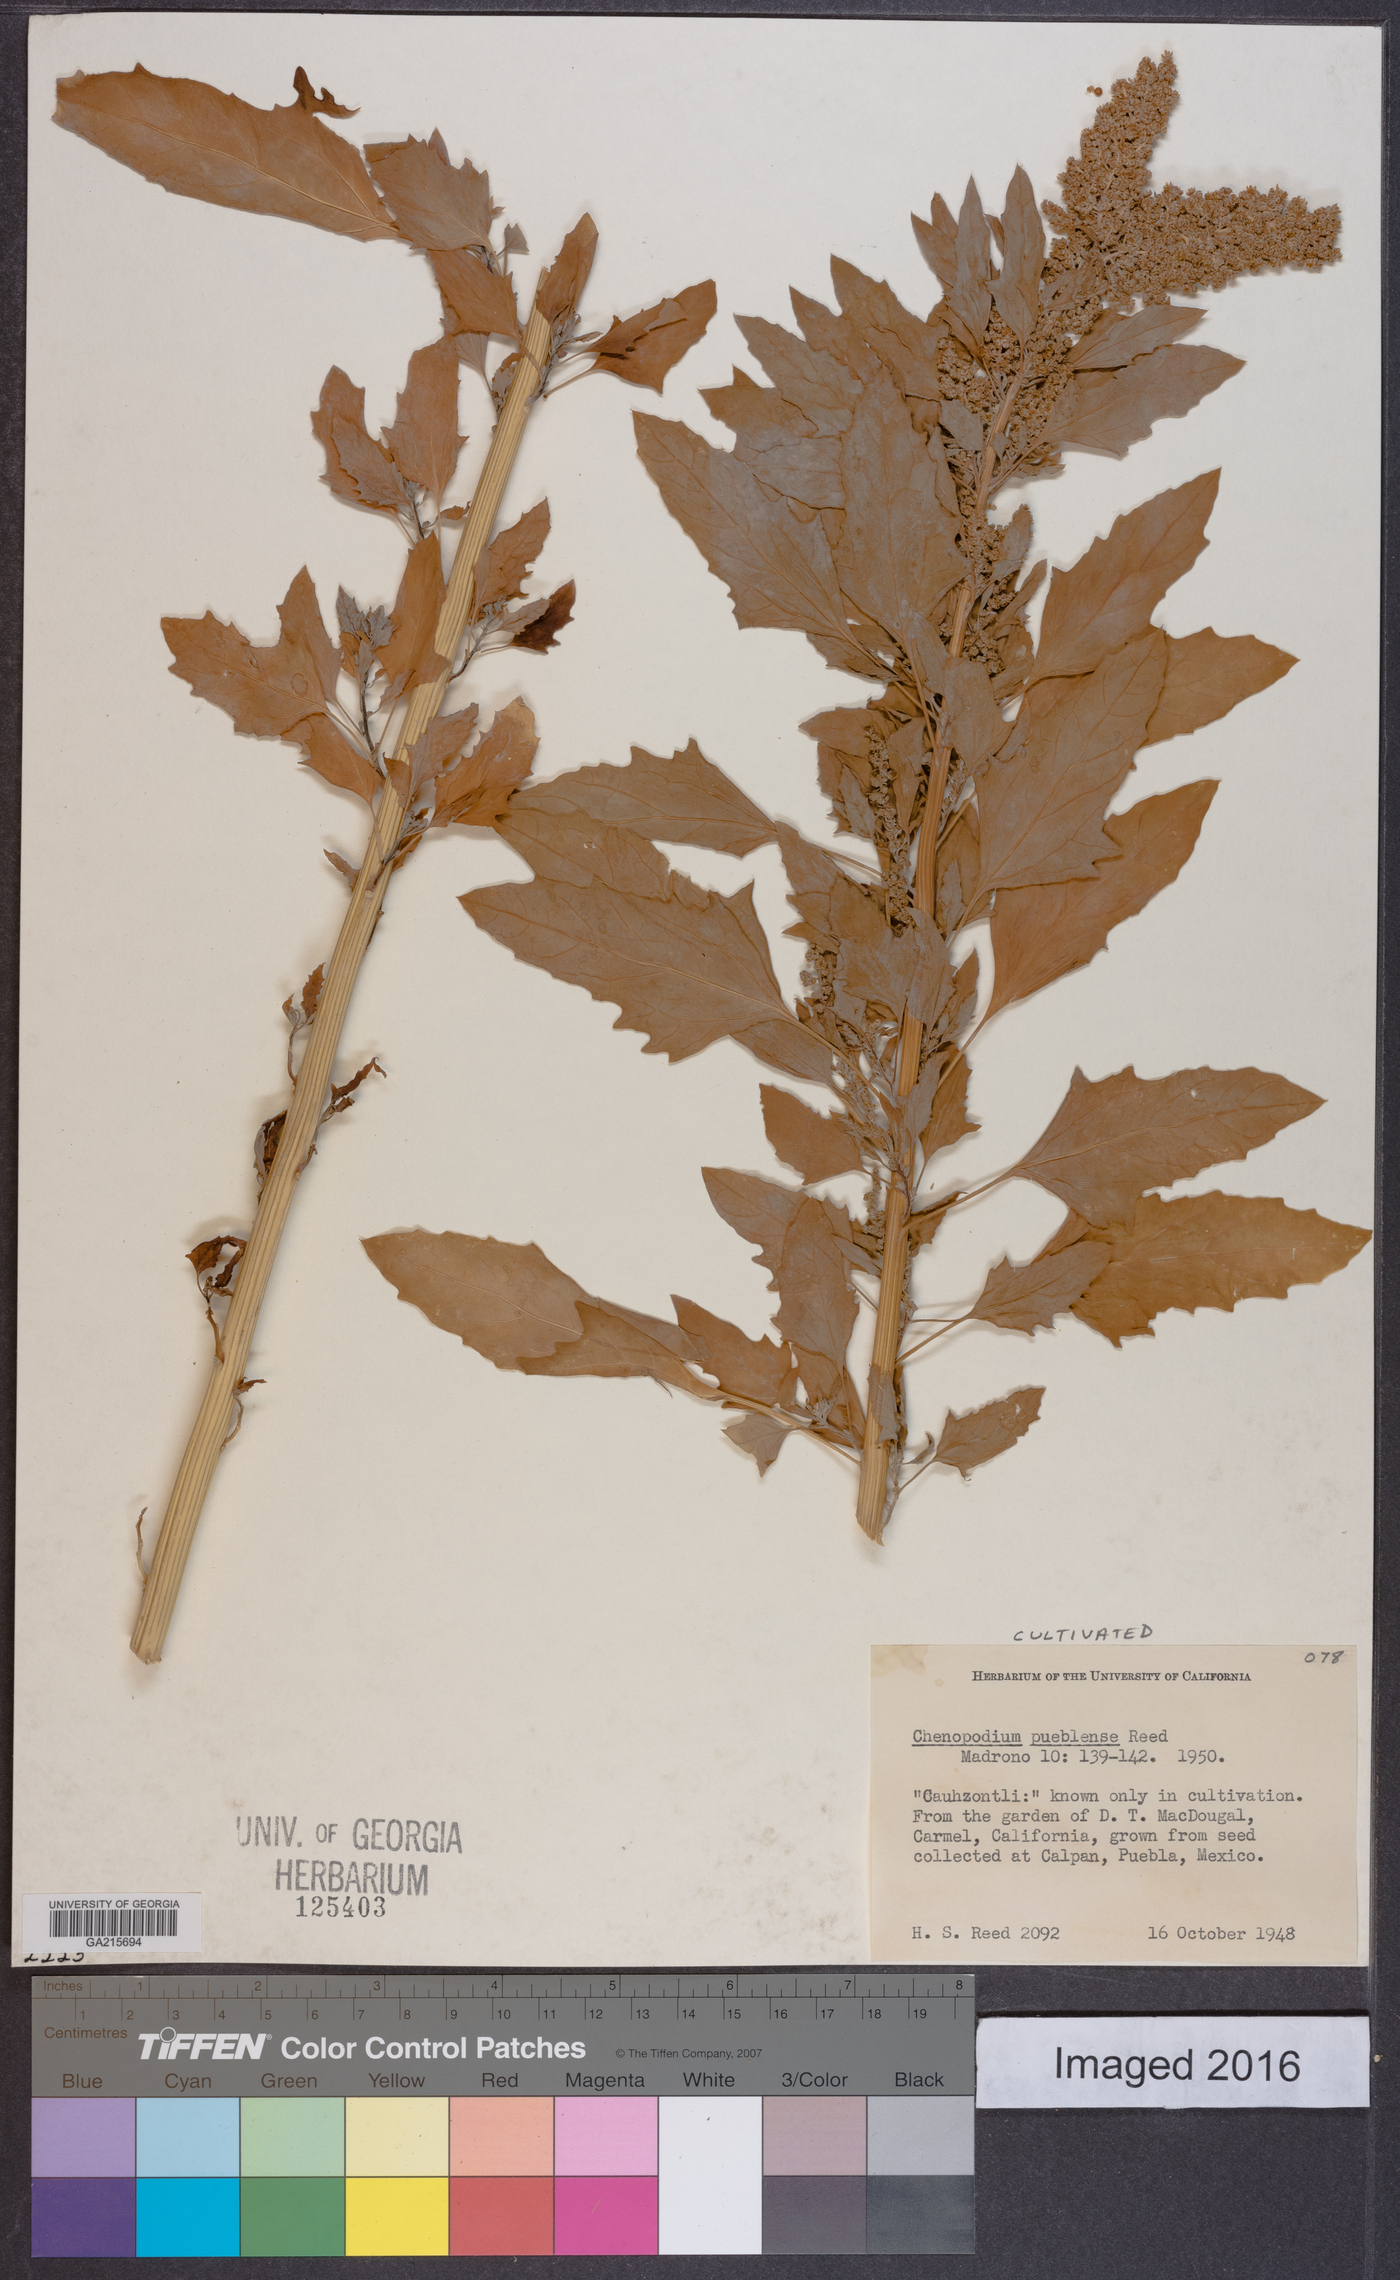 Chenopodium pueblense image